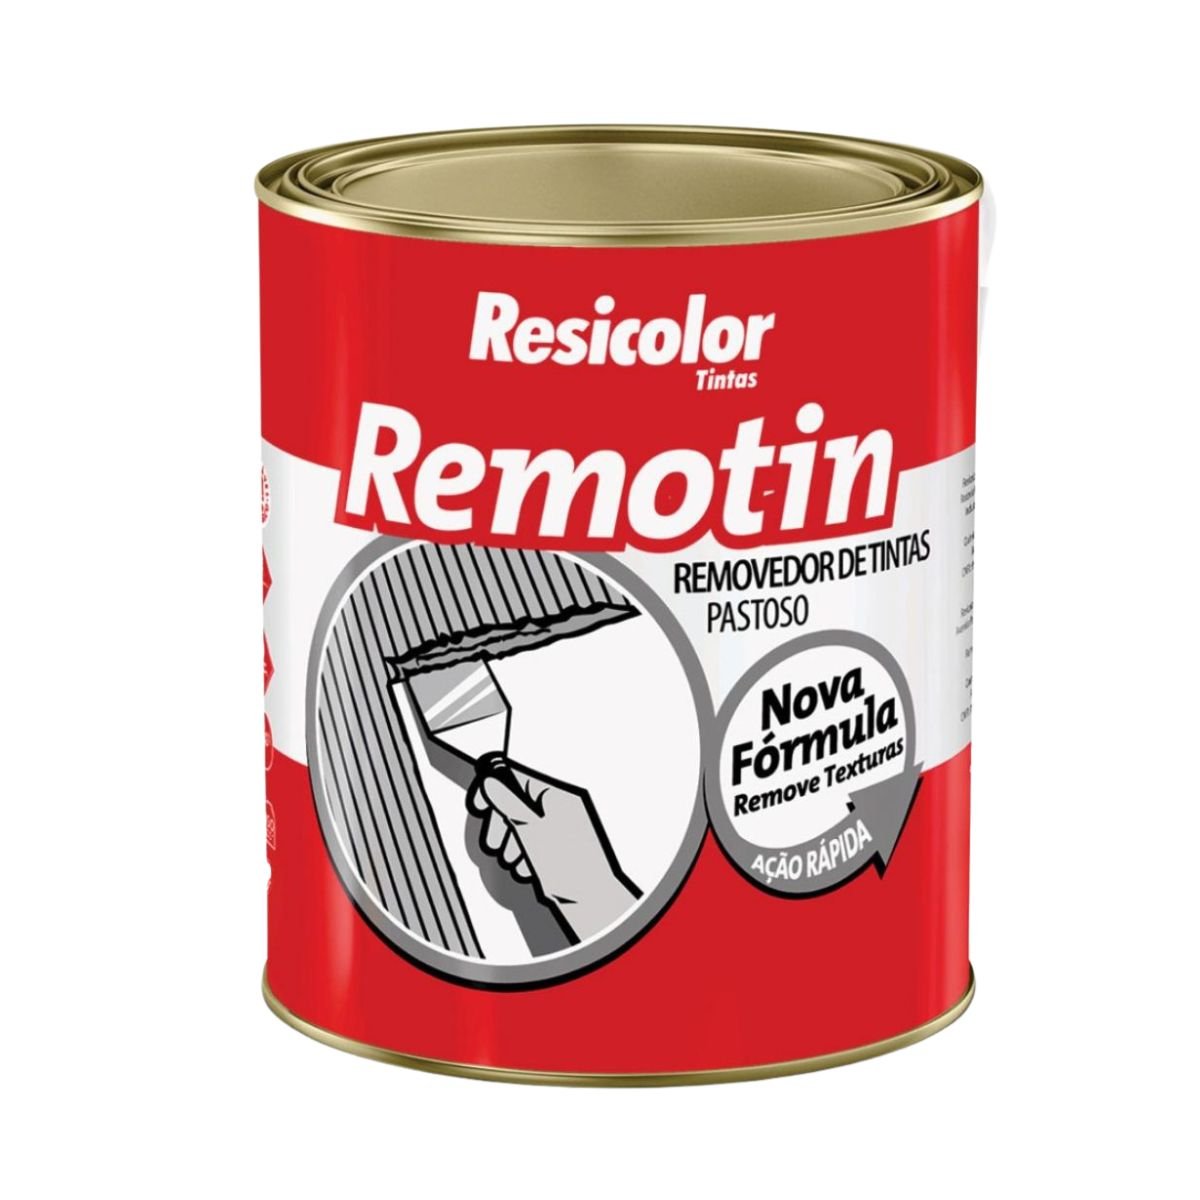 Remotin (removedor de Tintas) 950gr | Resicolor Removedor de Tintas